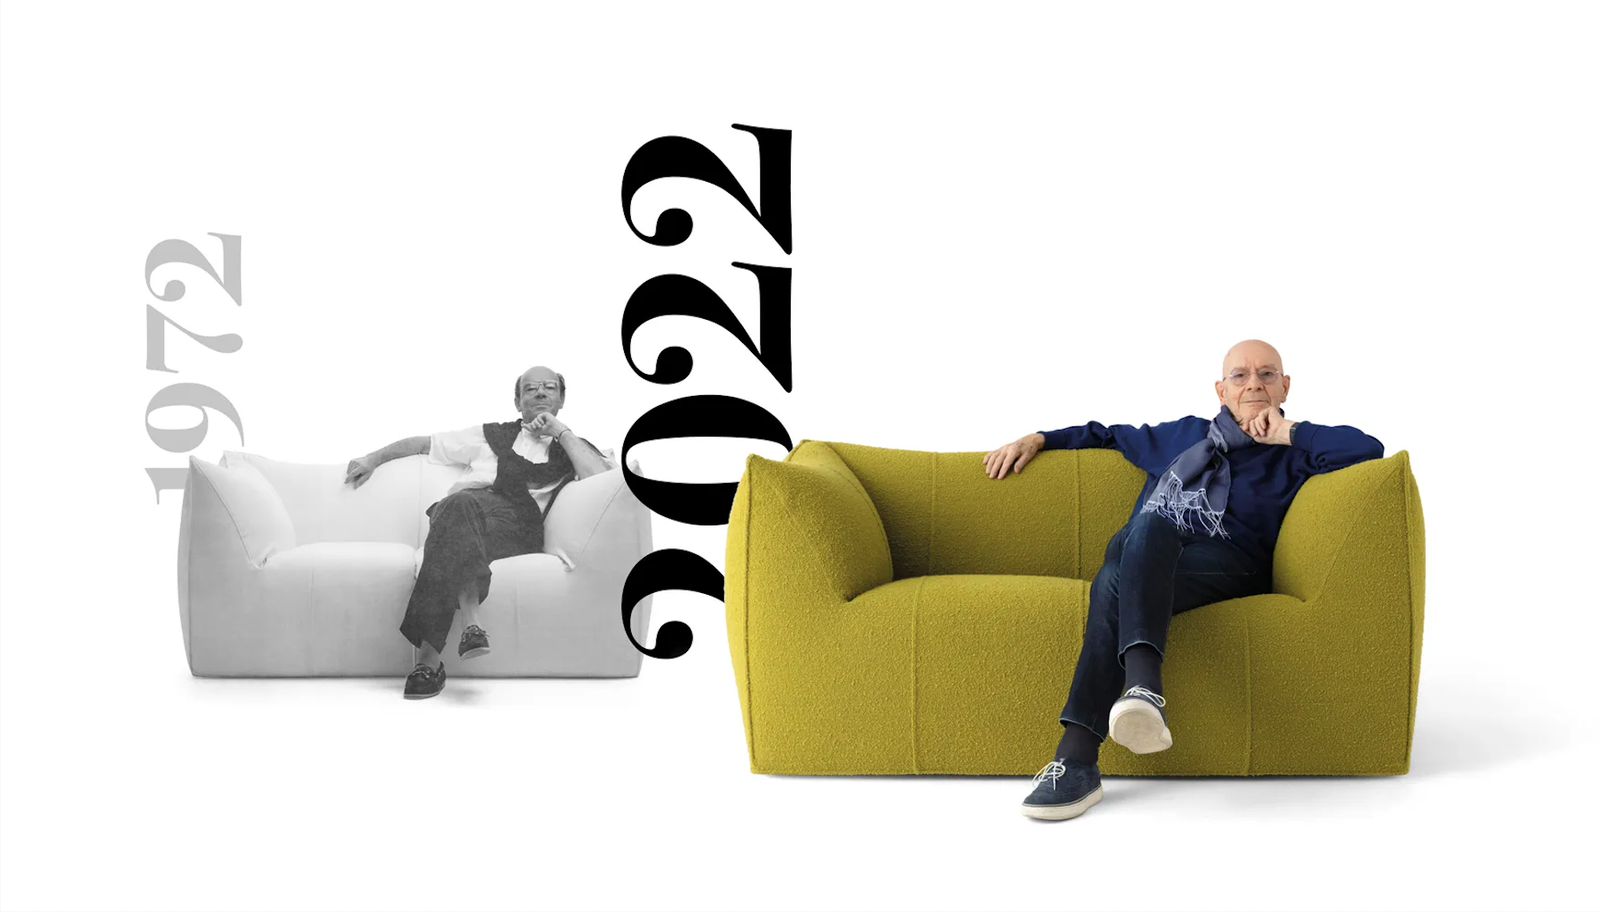 Le Bambole 2022 in a new version. Mario Bellini is sitting on Bi-bambola Sofa